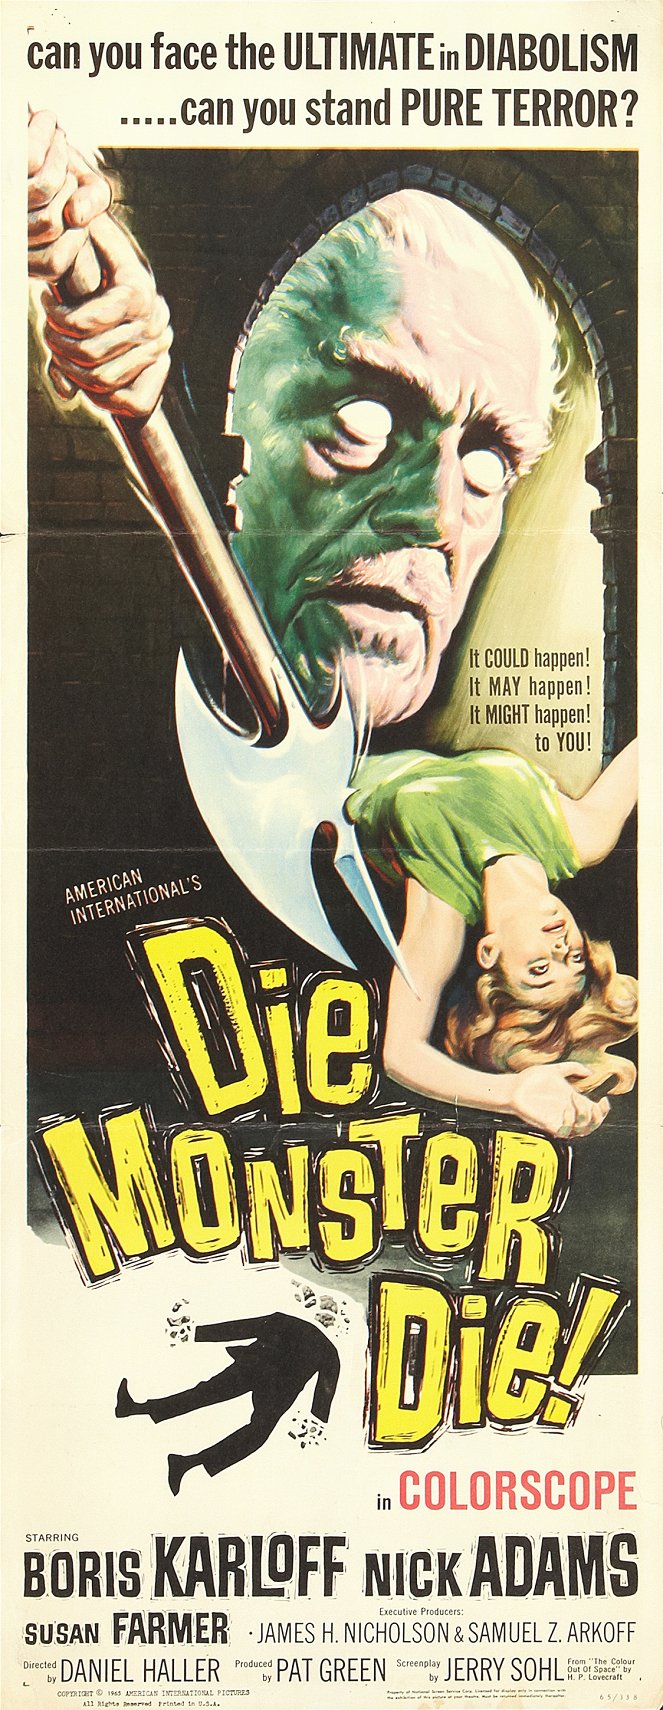 Monster of Terror - Posters